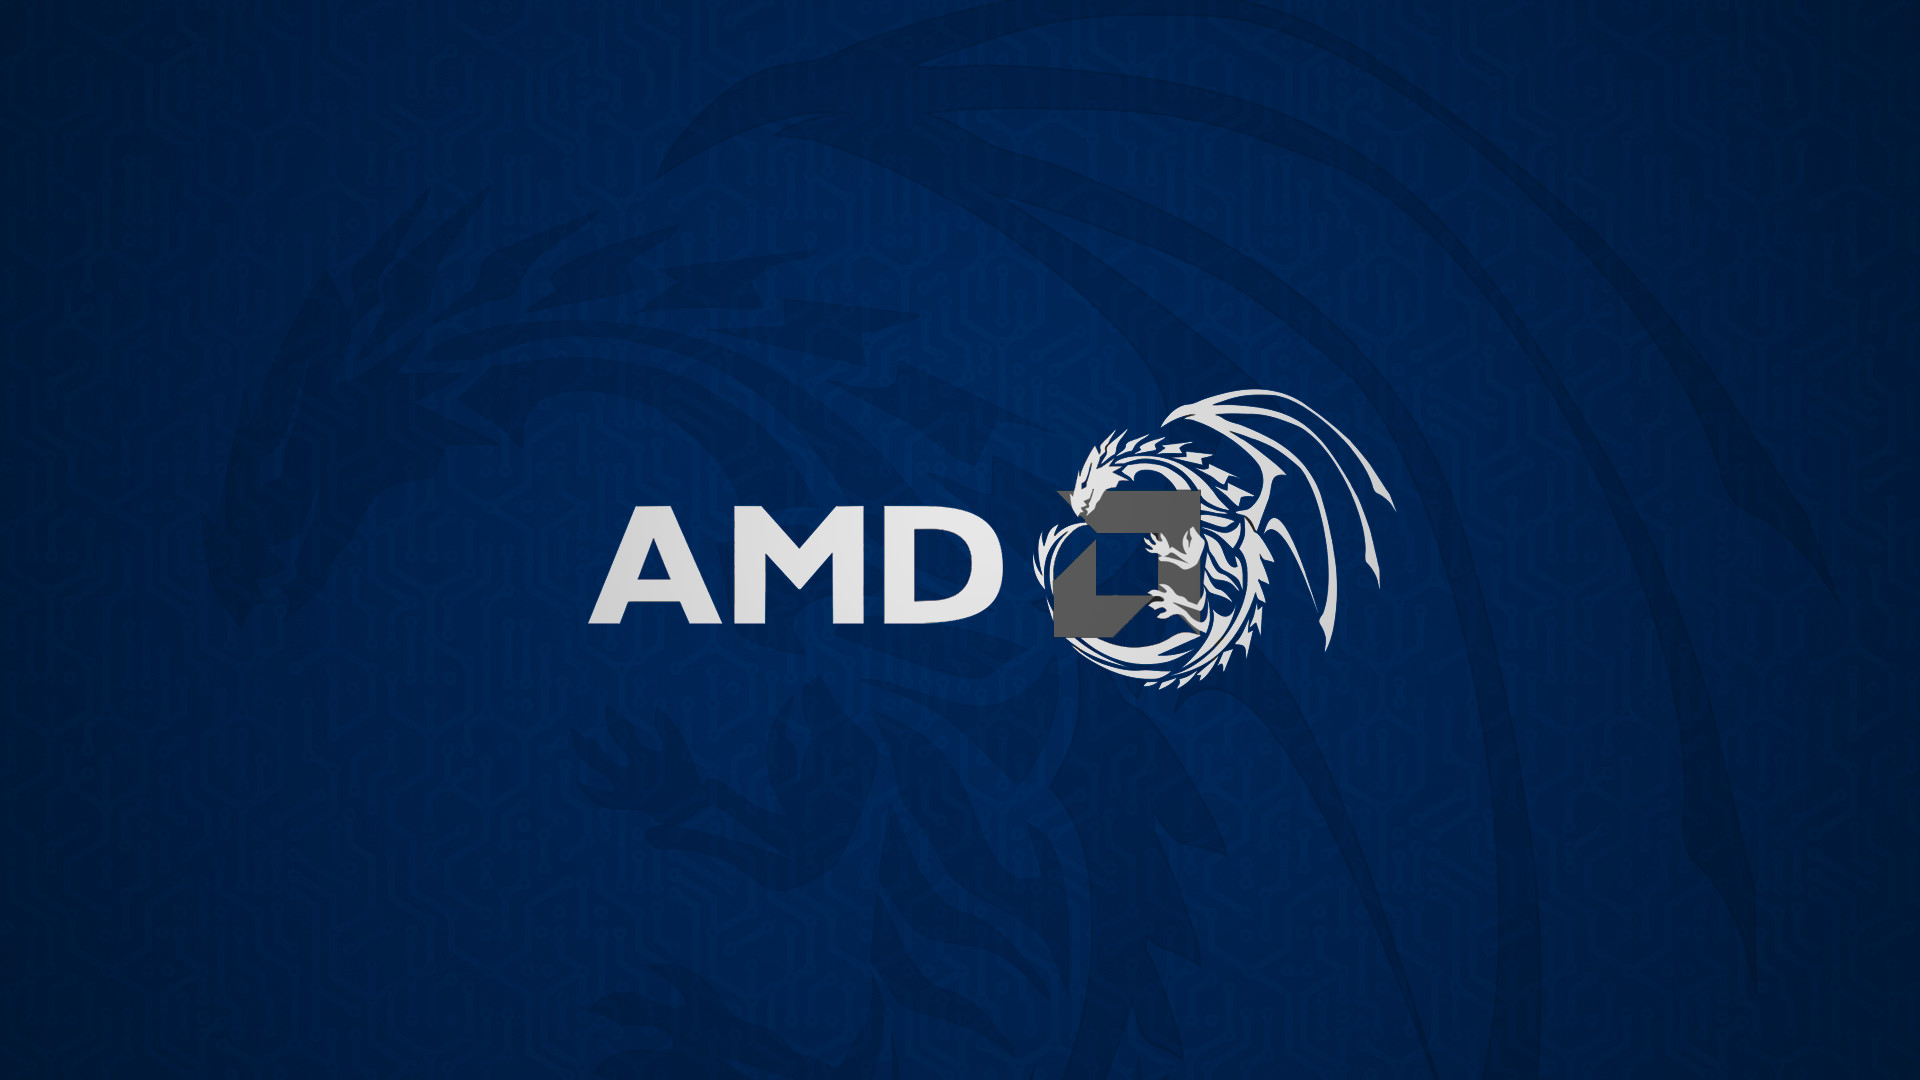 amd wallpaper 4k,logo,blue,font,brand,graphics